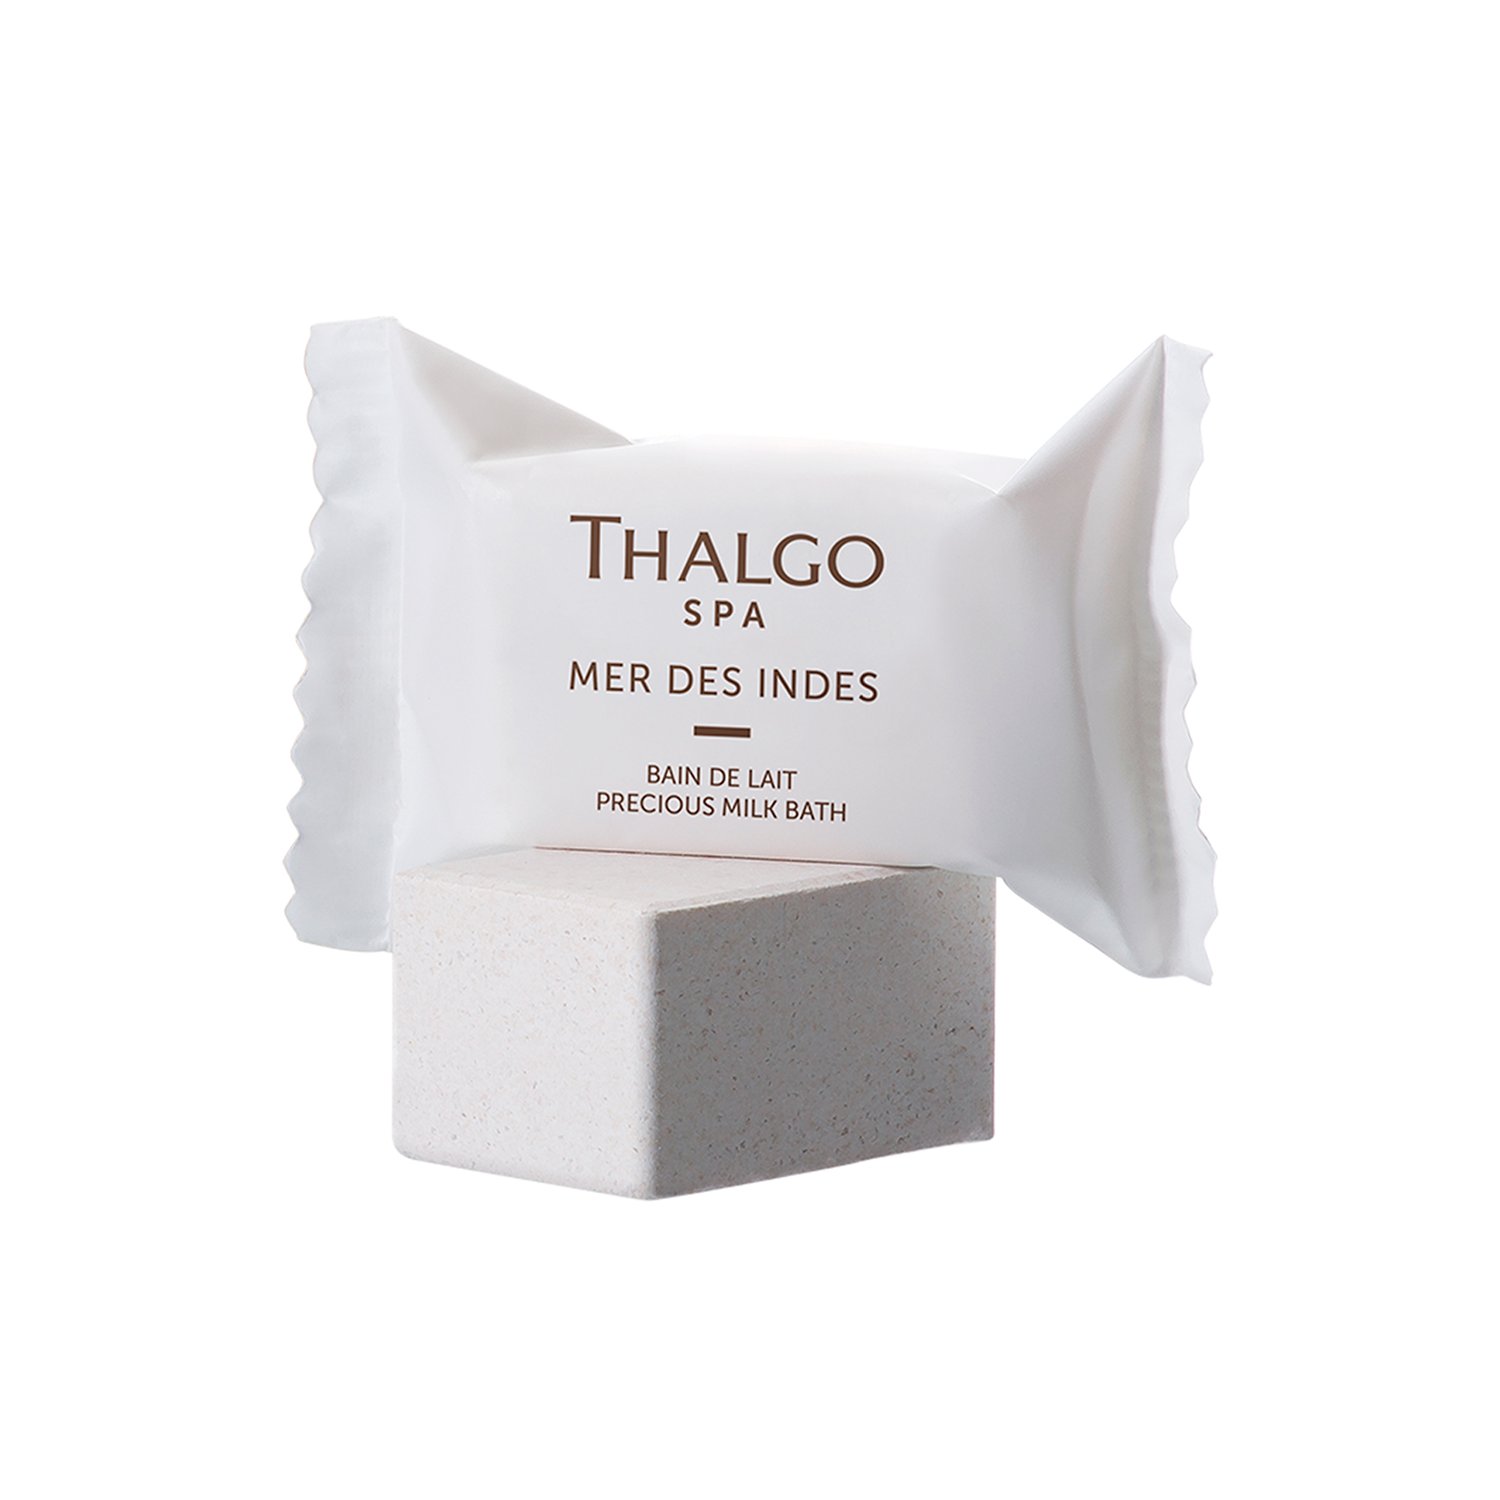 Thalgo MER DES INDES таблетки для ванны 6 уп. Х 28 г 168 мл.